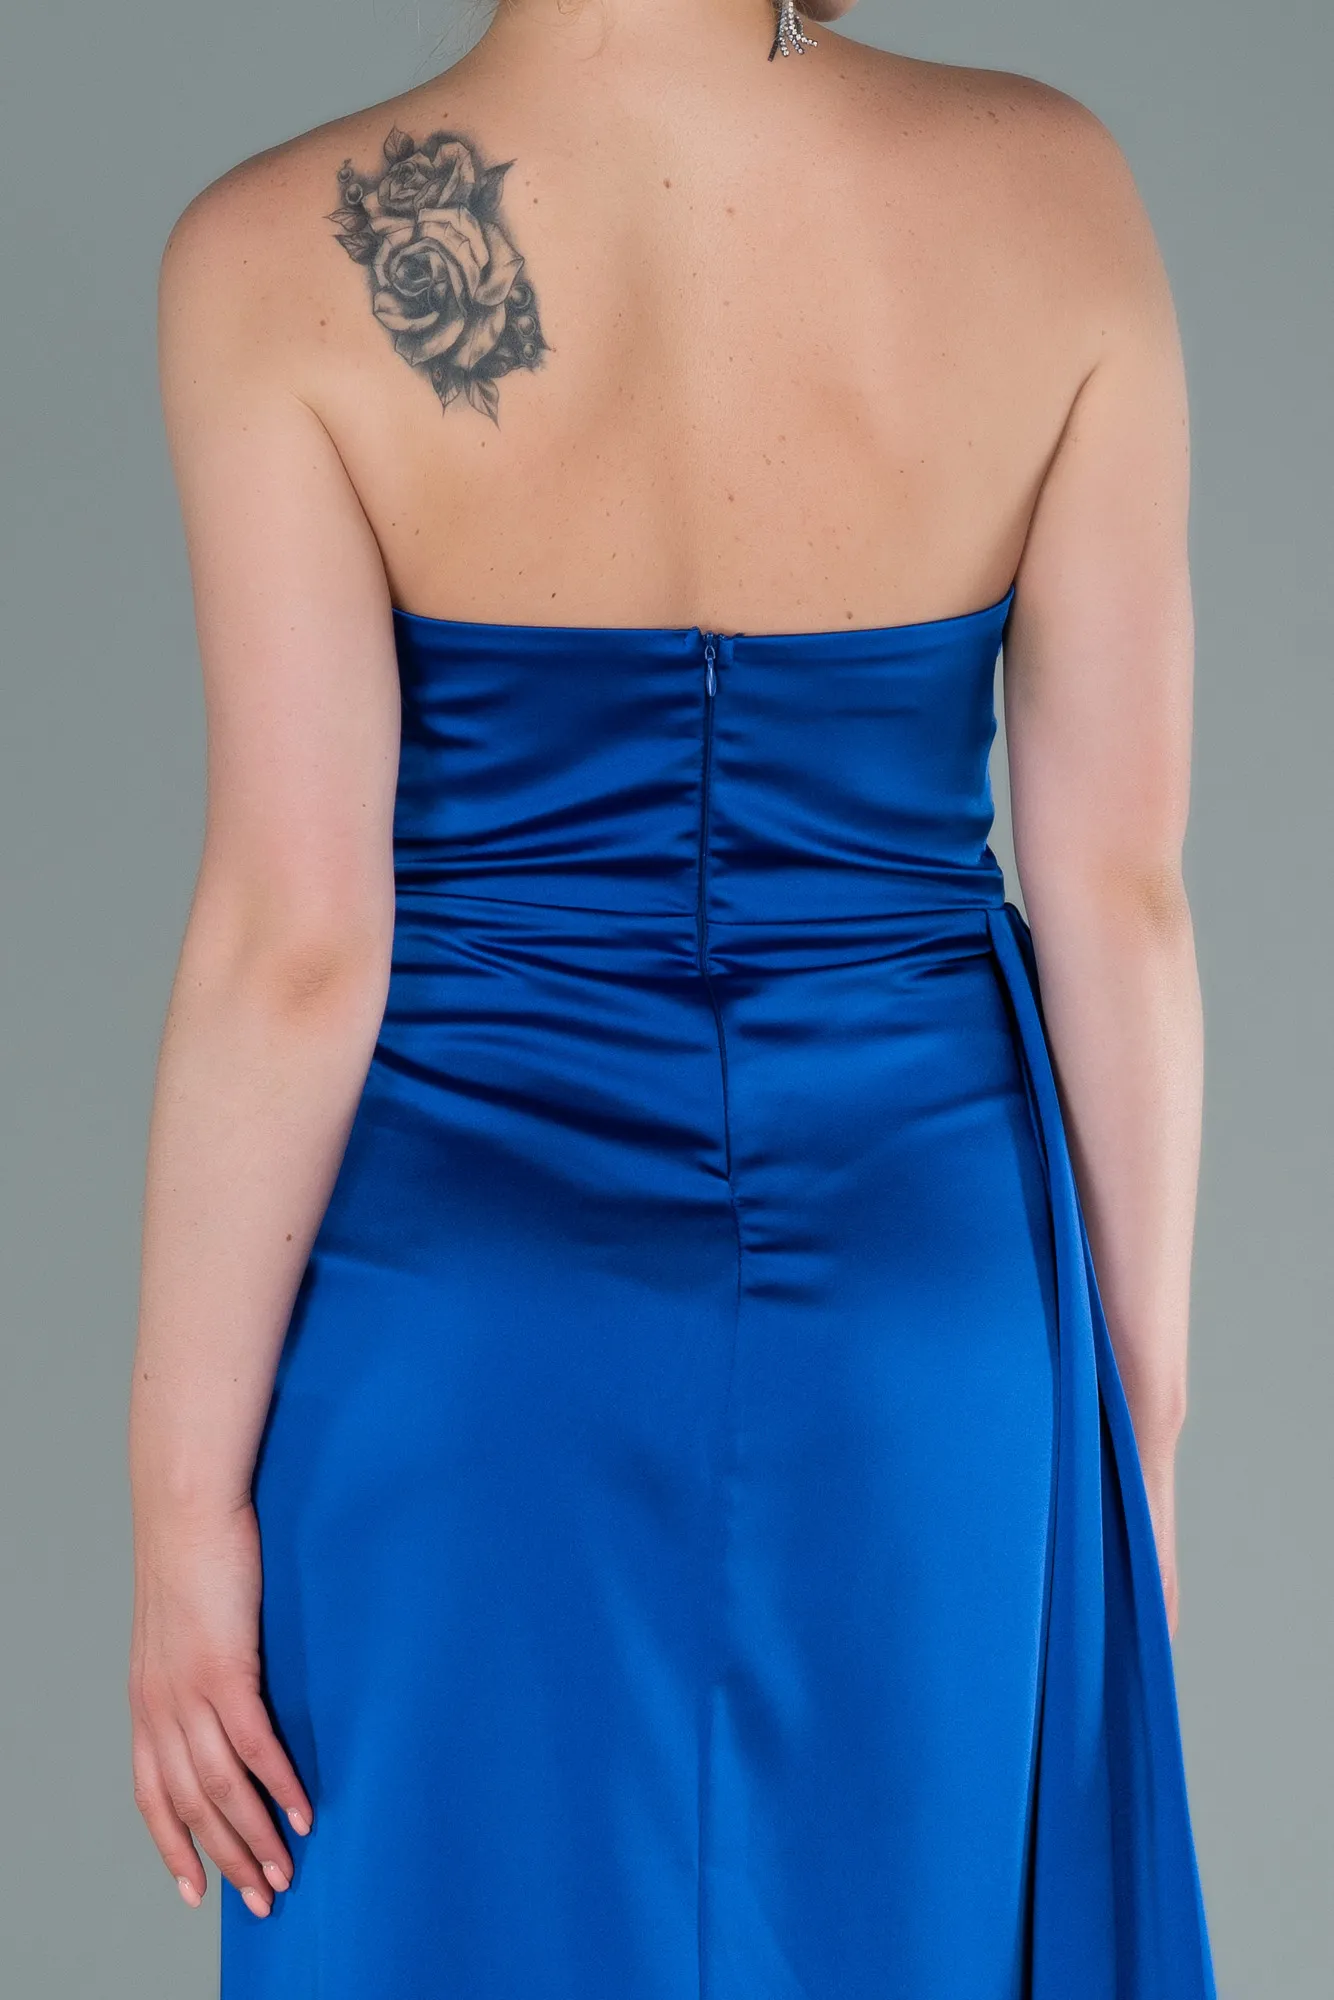 Sax Blue-Long Satin Prom Gown ABU2340